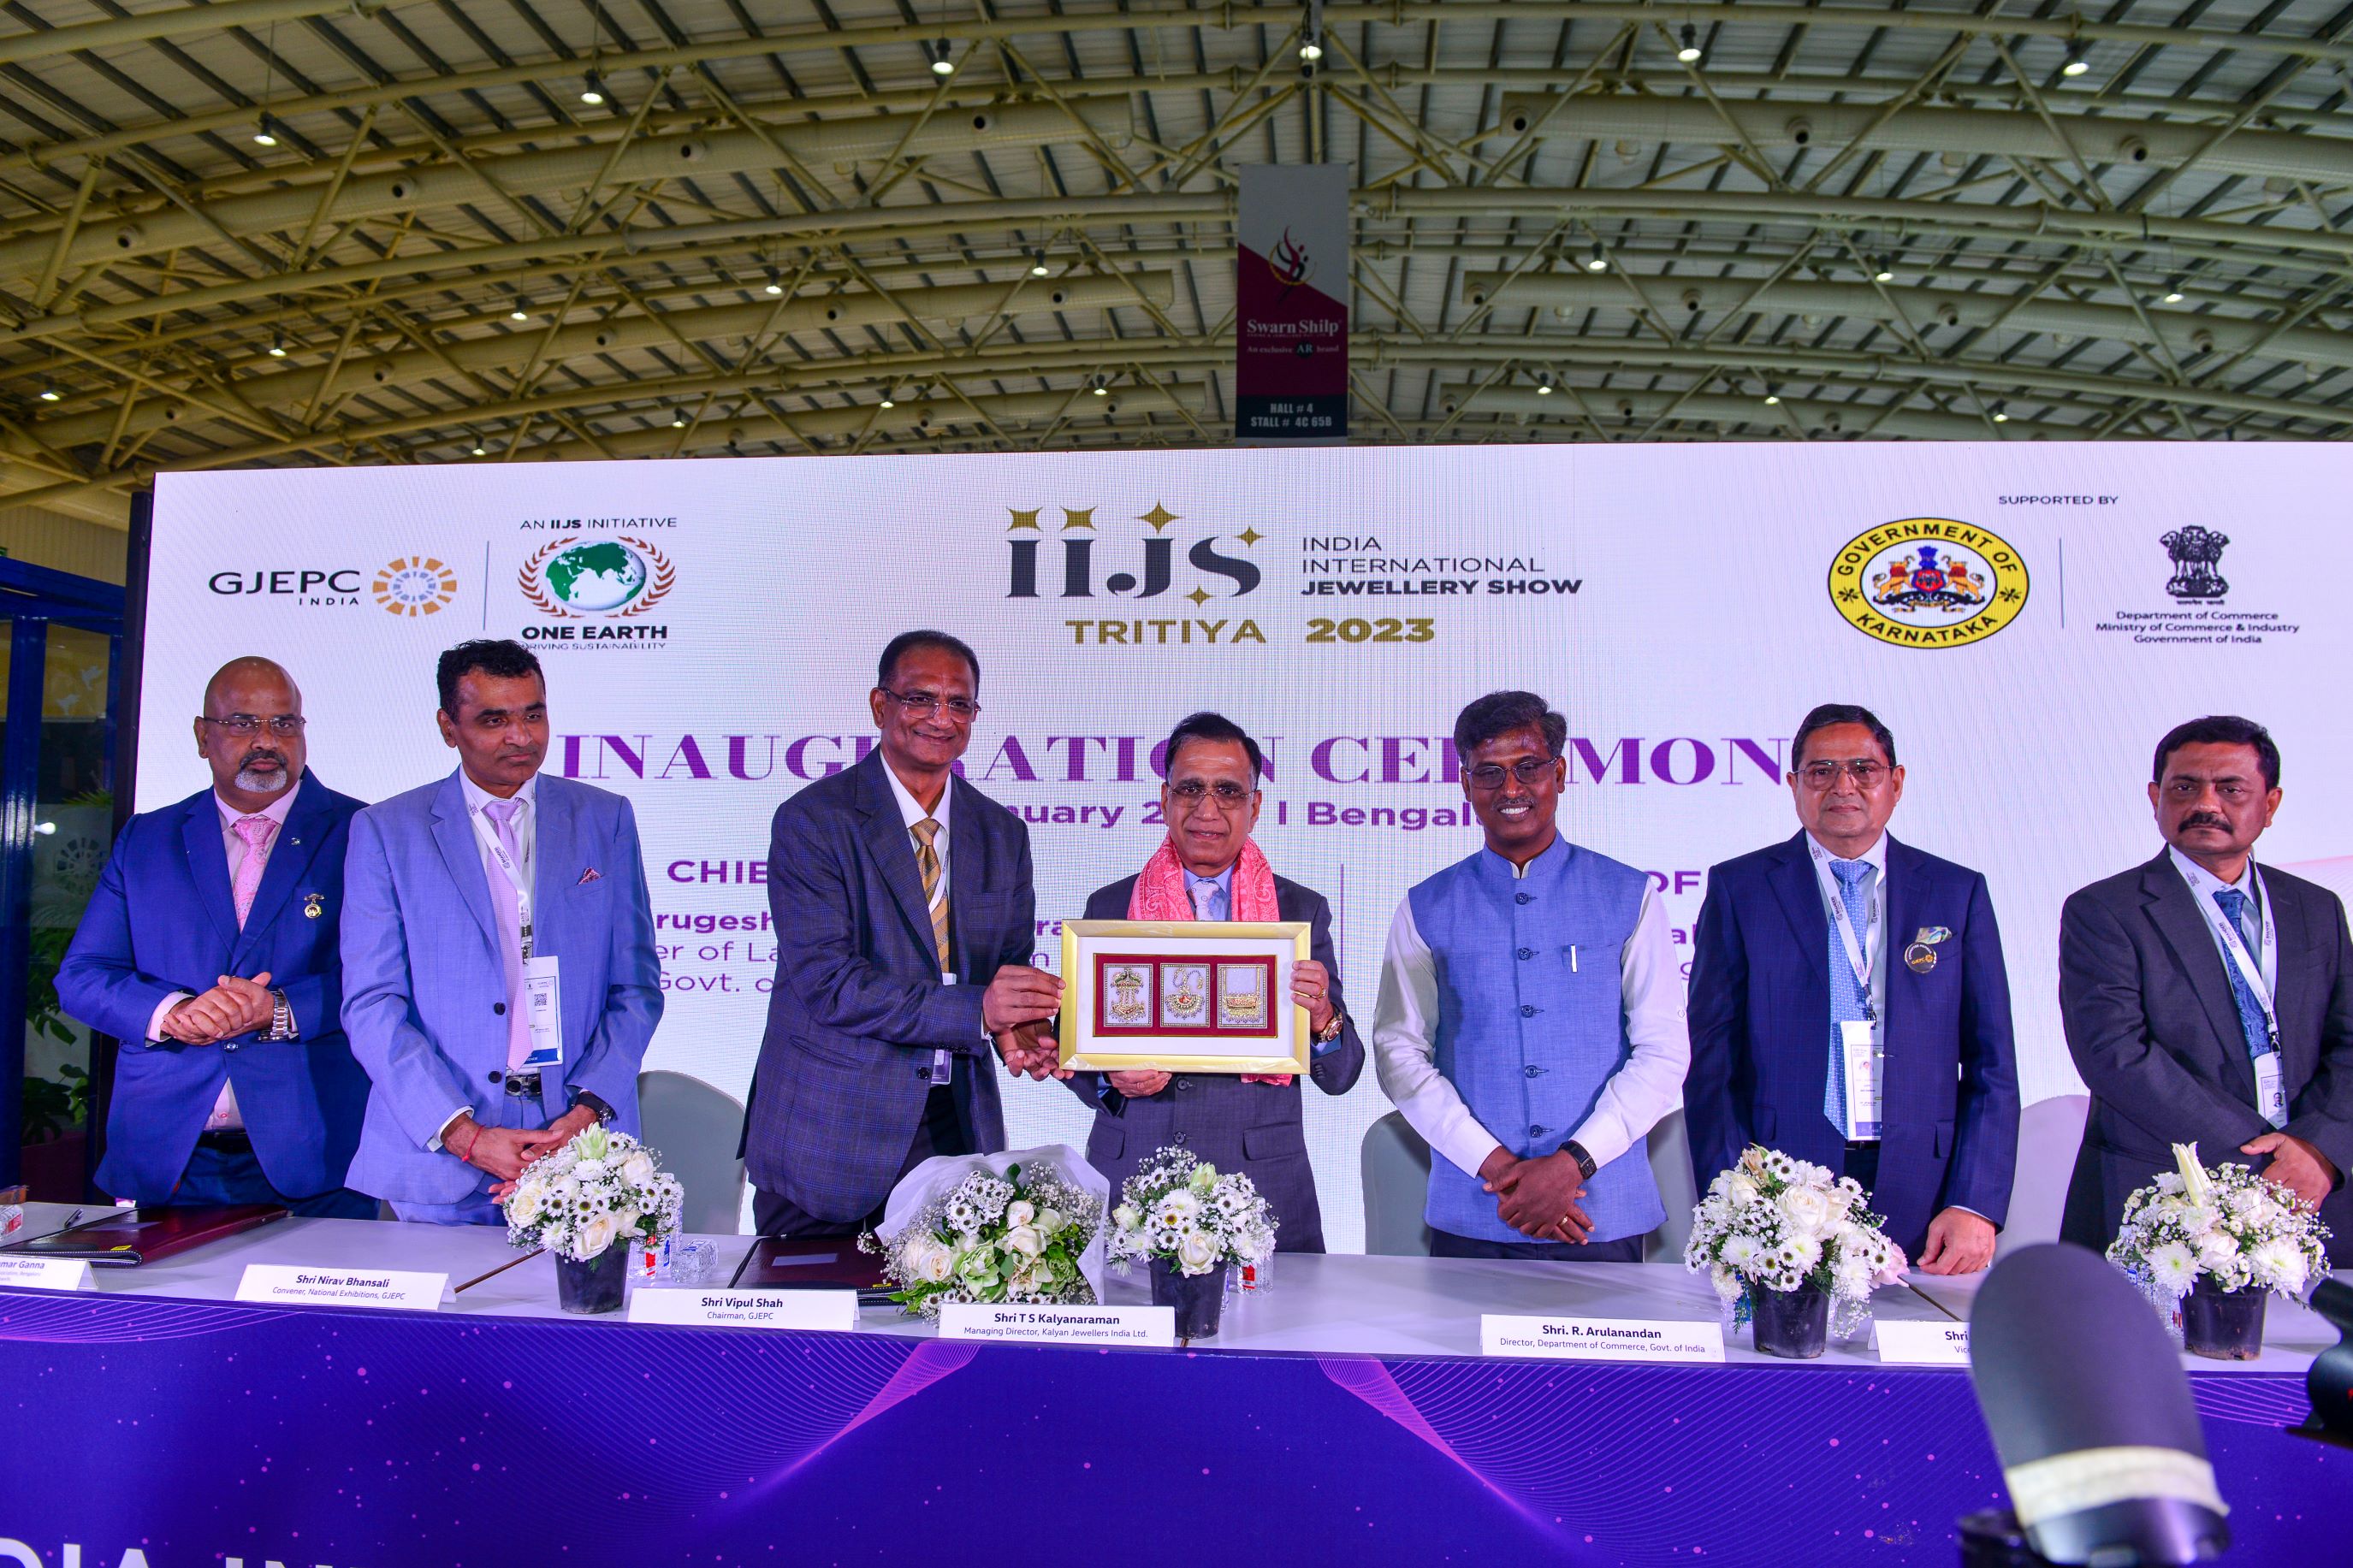 Hon’ble Karnataka Minister Dr. Murugesh R. Nirani inaugurates the 1st Edition of IIJS Tritiya in Bangalore